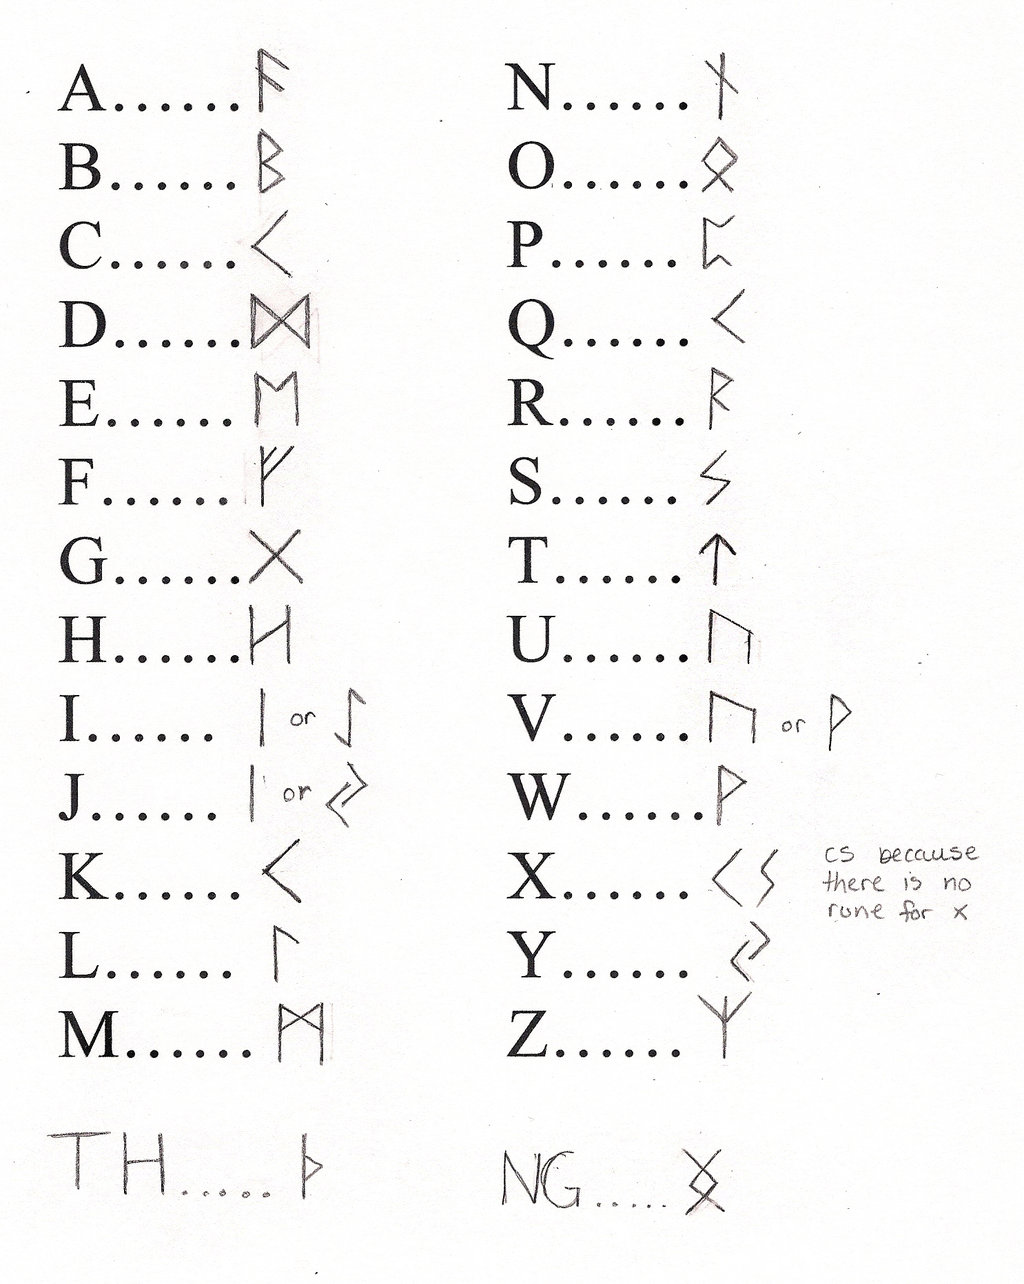 Viking Rune Index by Bunkinator on